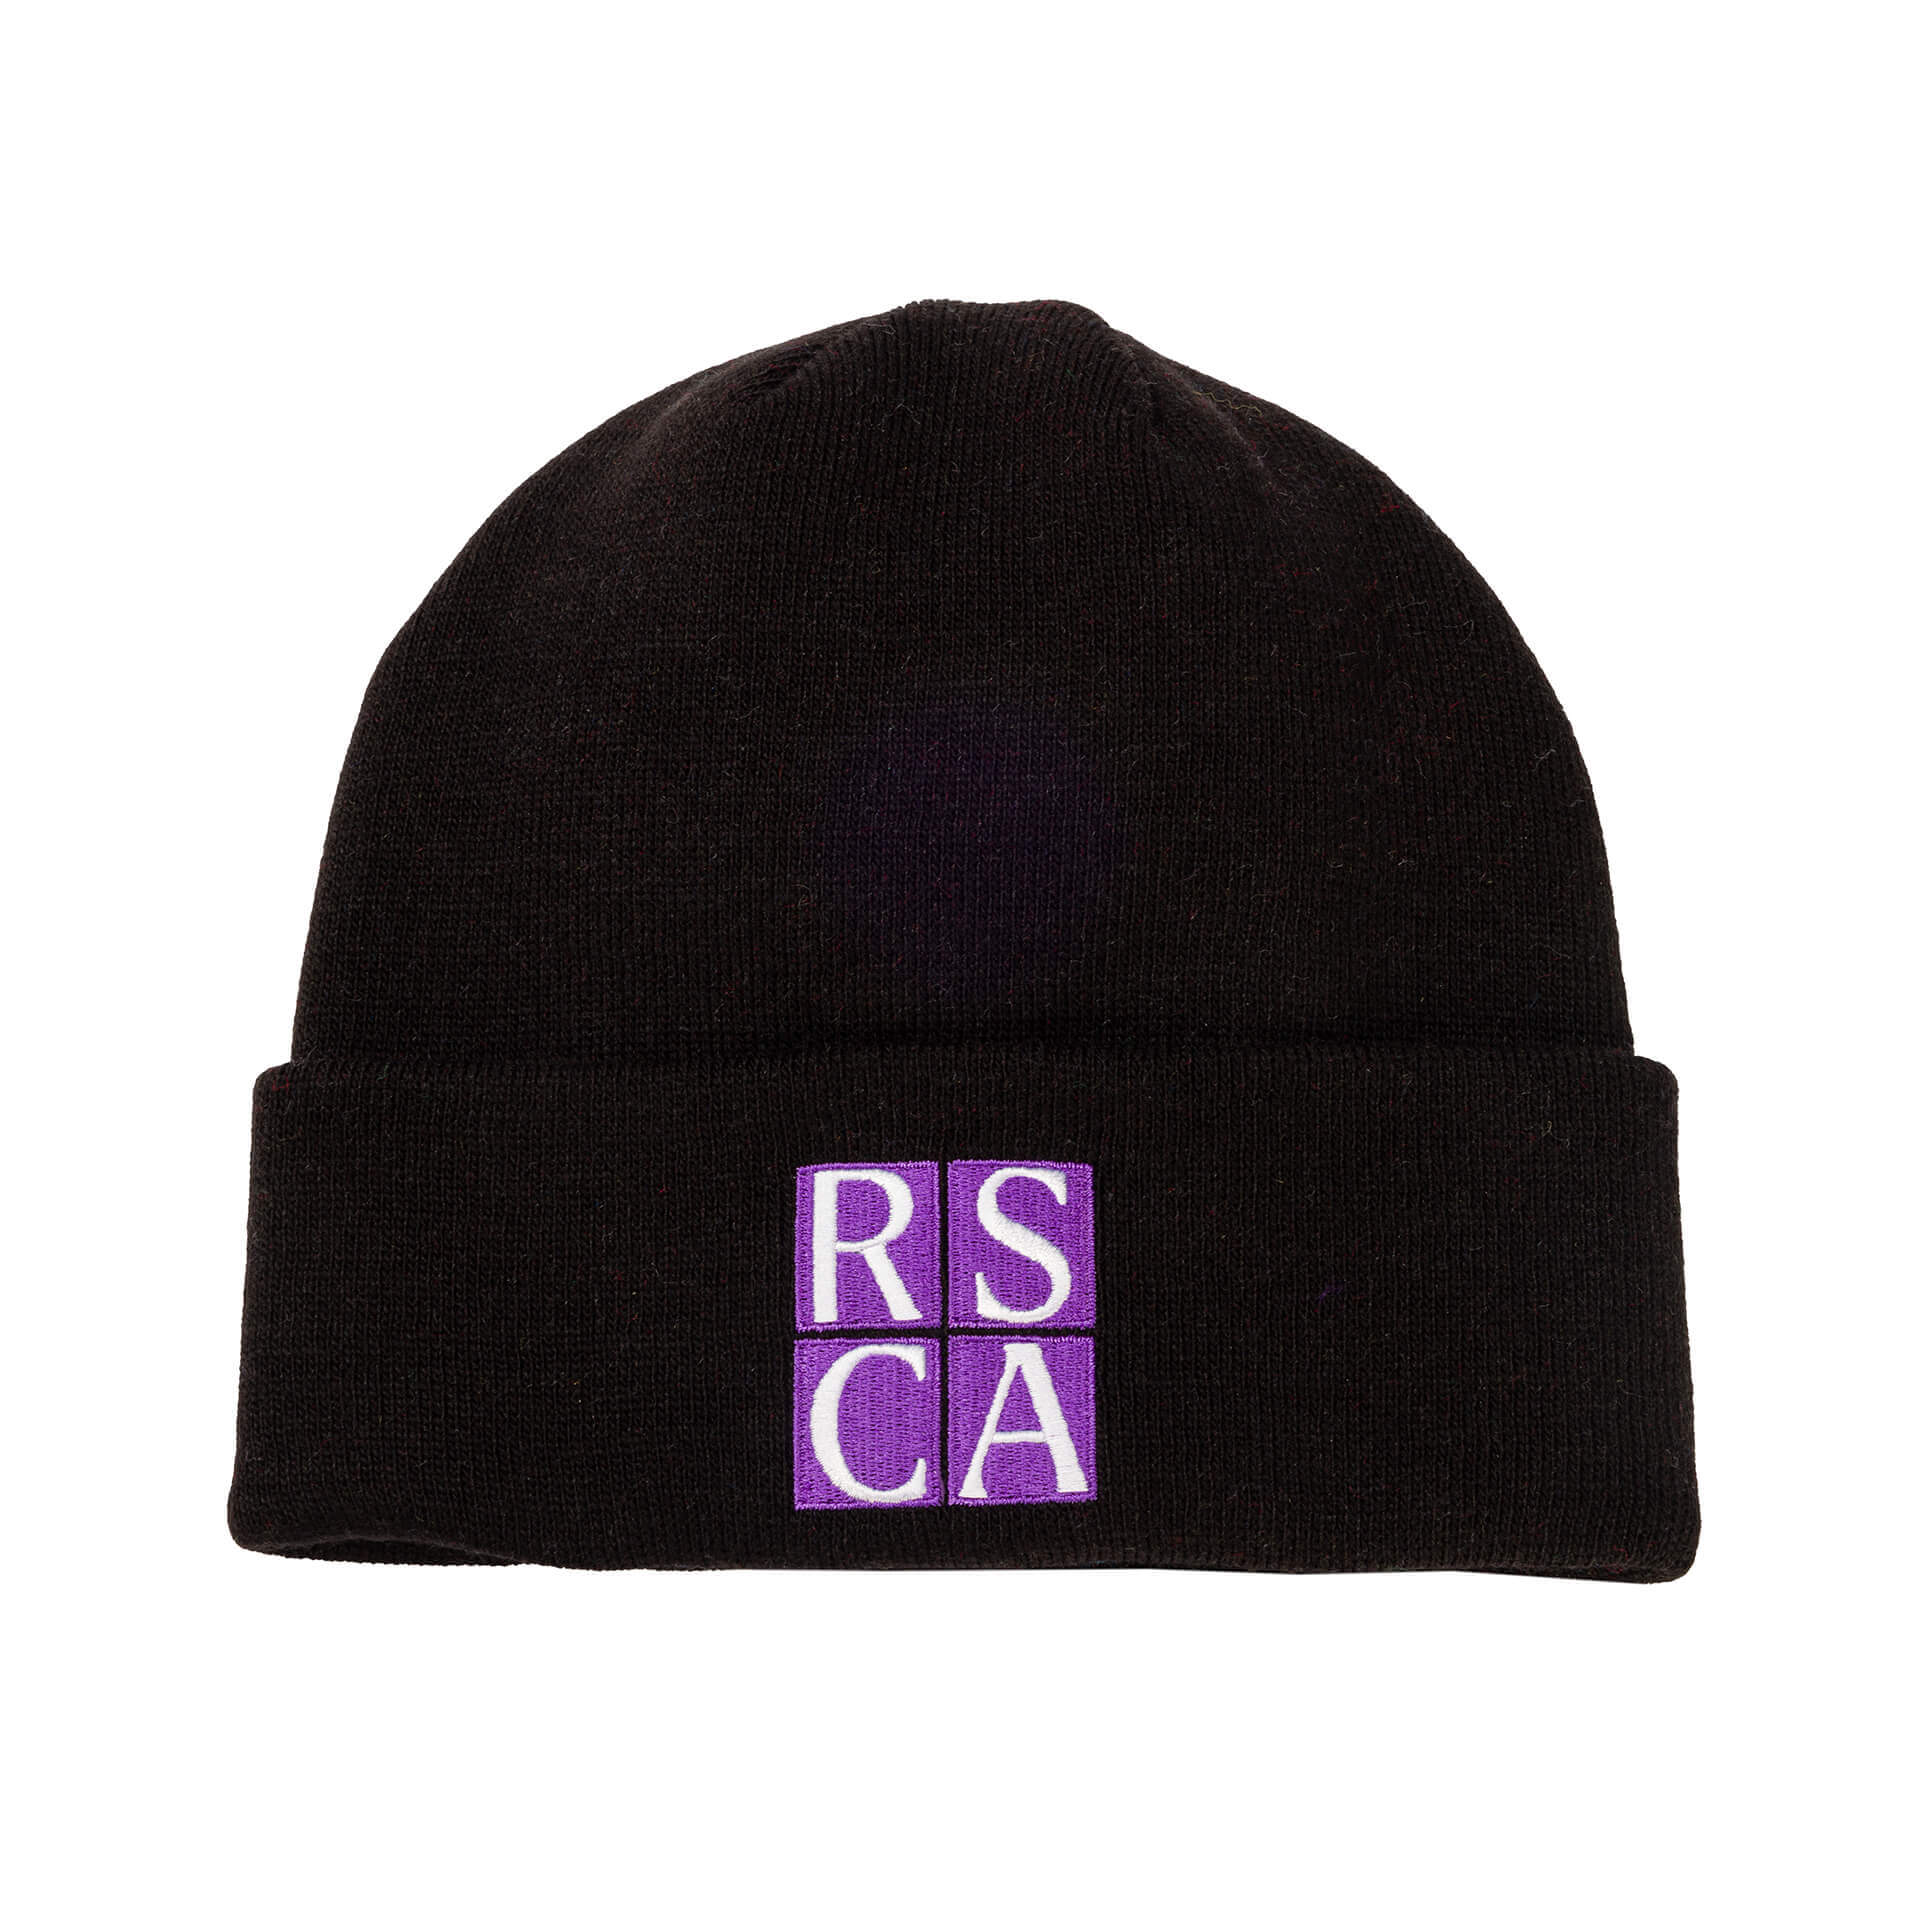 RSCA muts met vierkant logo 